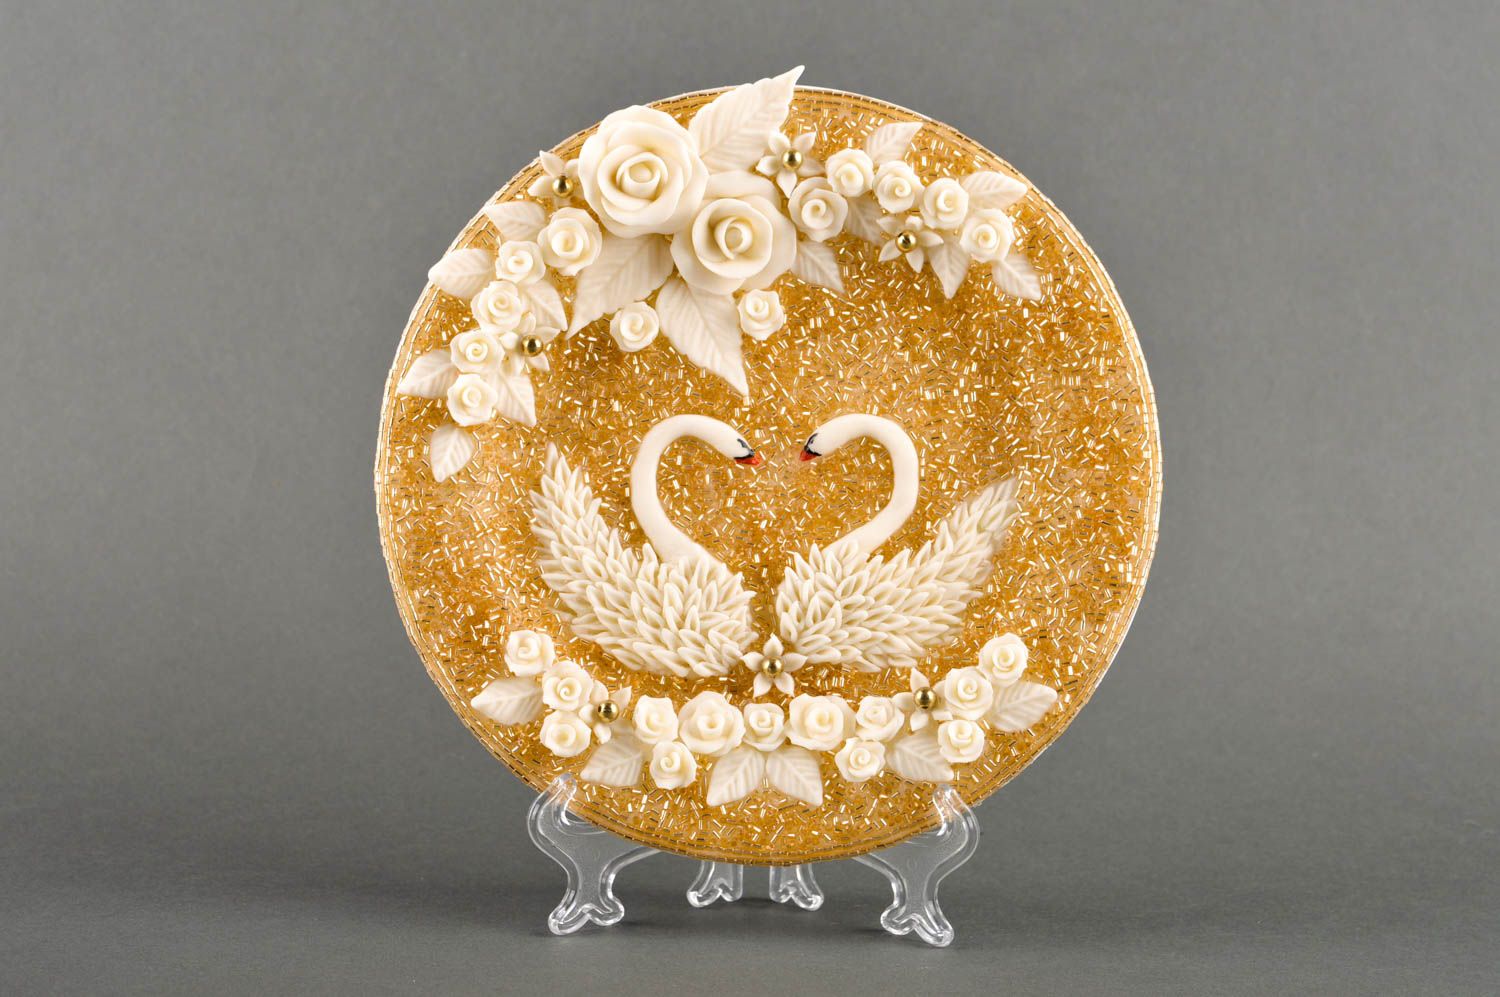 Handmade beautiful festive plate designer unusual ware decorative use only photo 1